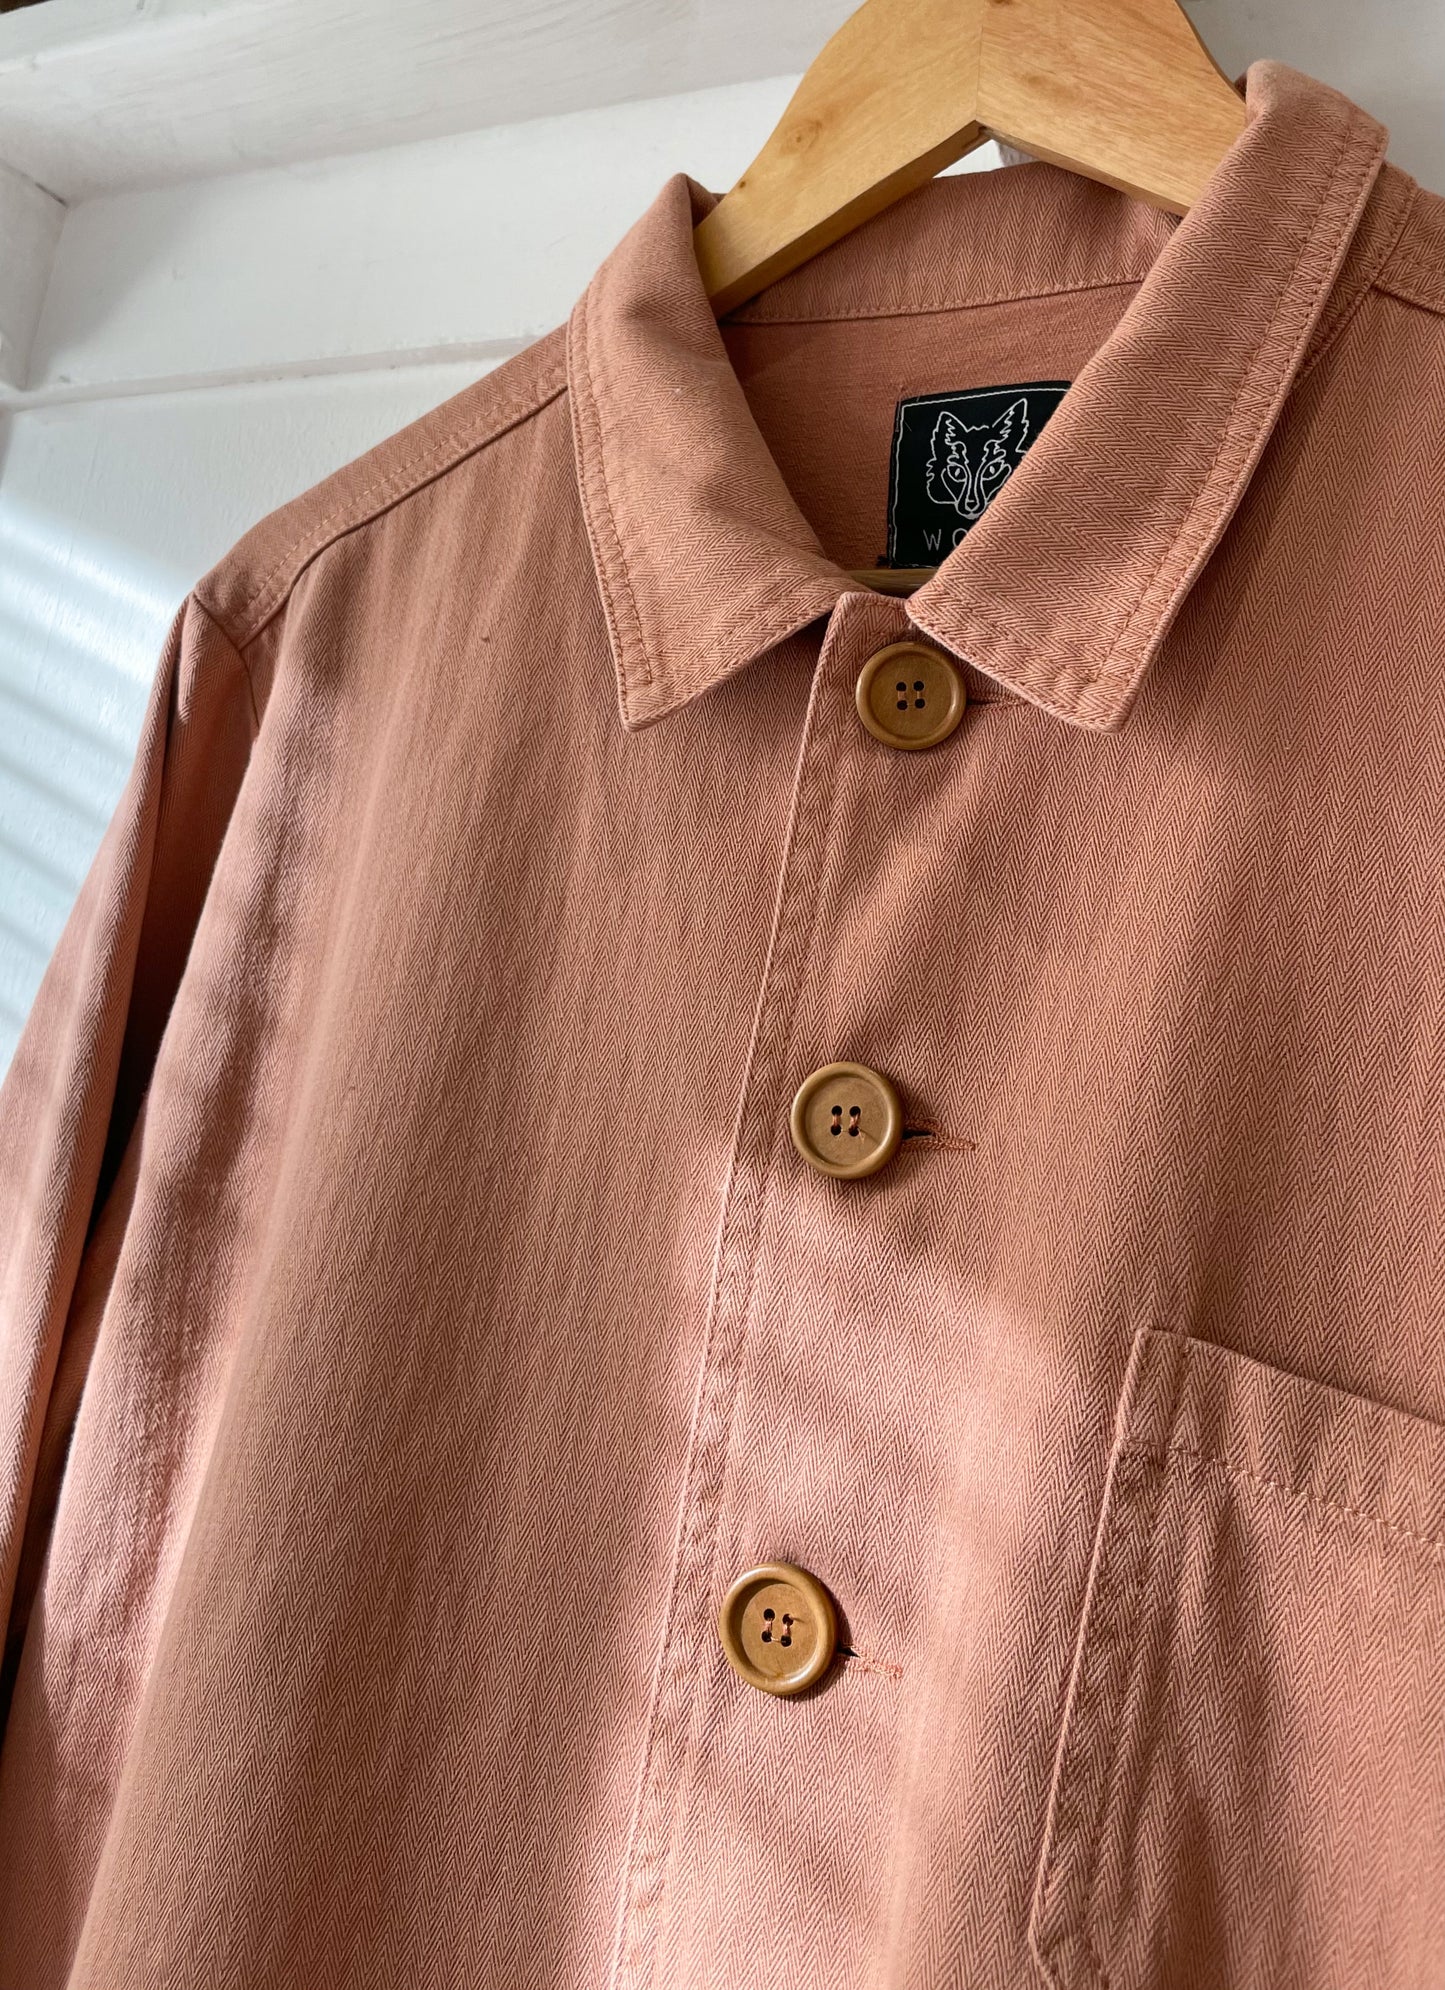 60s Style Herringbone Chore Jacket Terracotta Pink